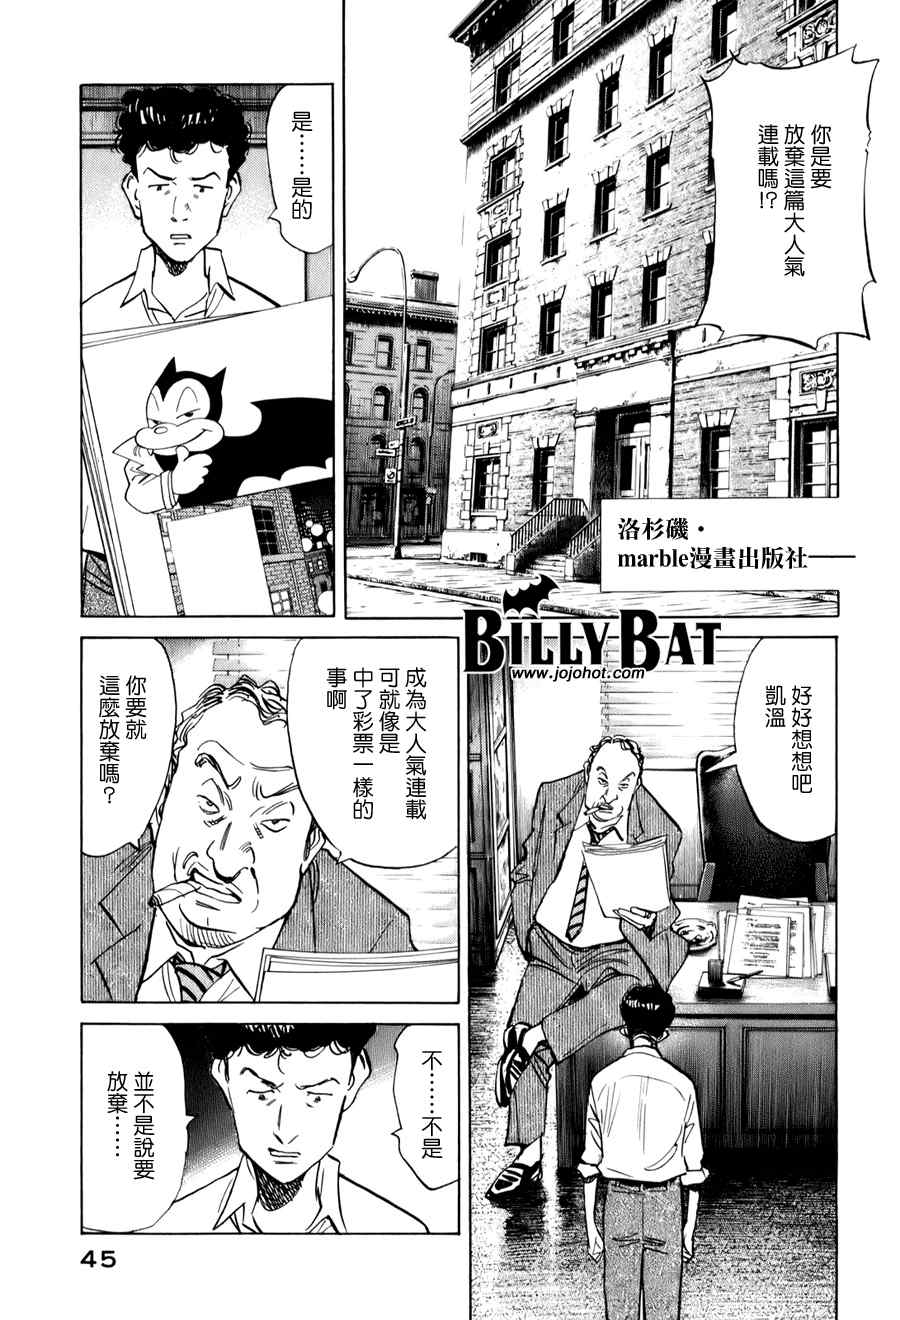 Billy_Bat - 第3话 - 1